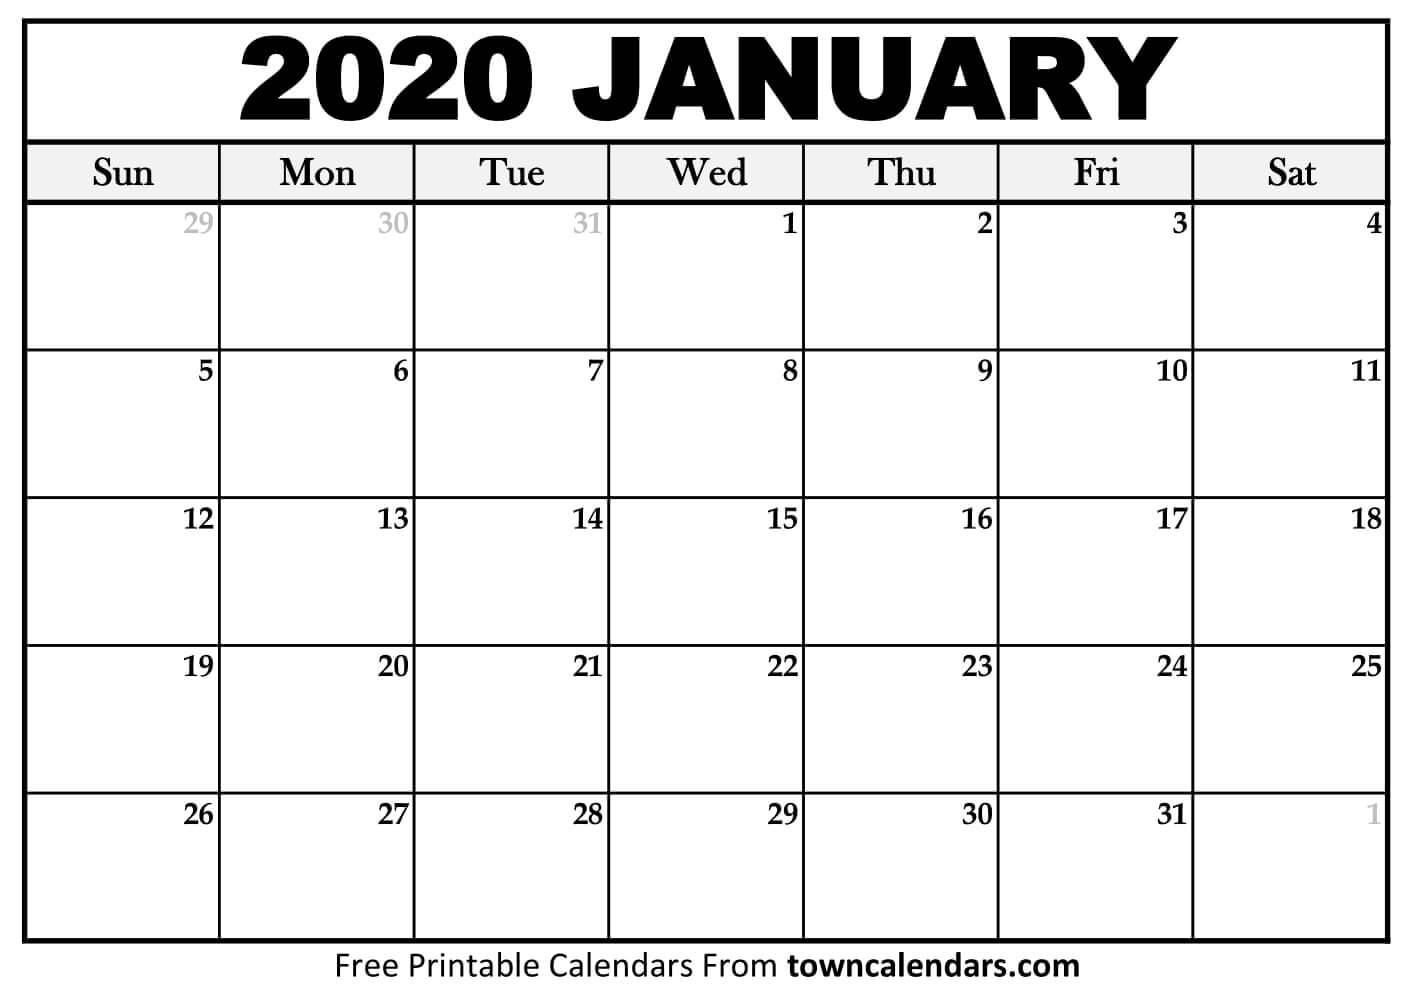 2020 Calendar Printable - Towncalendars Exceptional Free Monthly Calendar 2018 2020 Printable